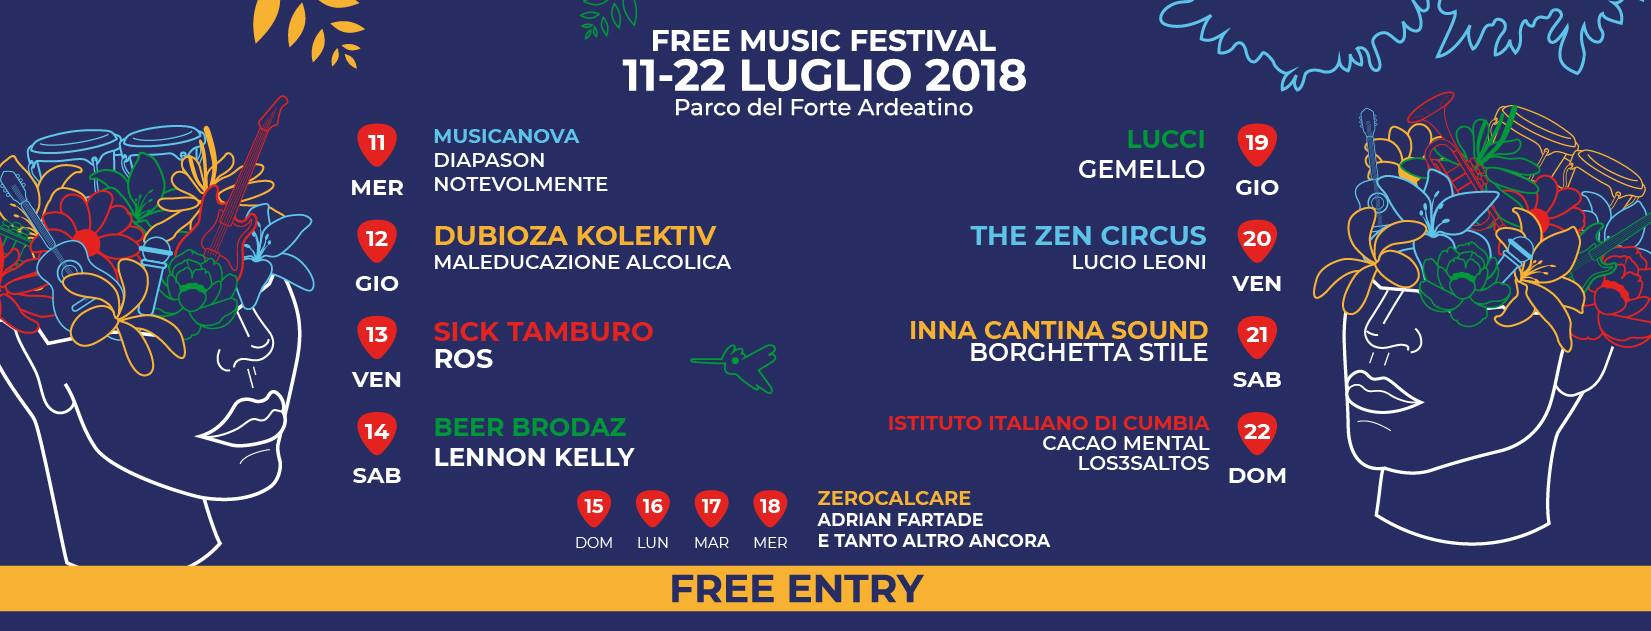 free music festival